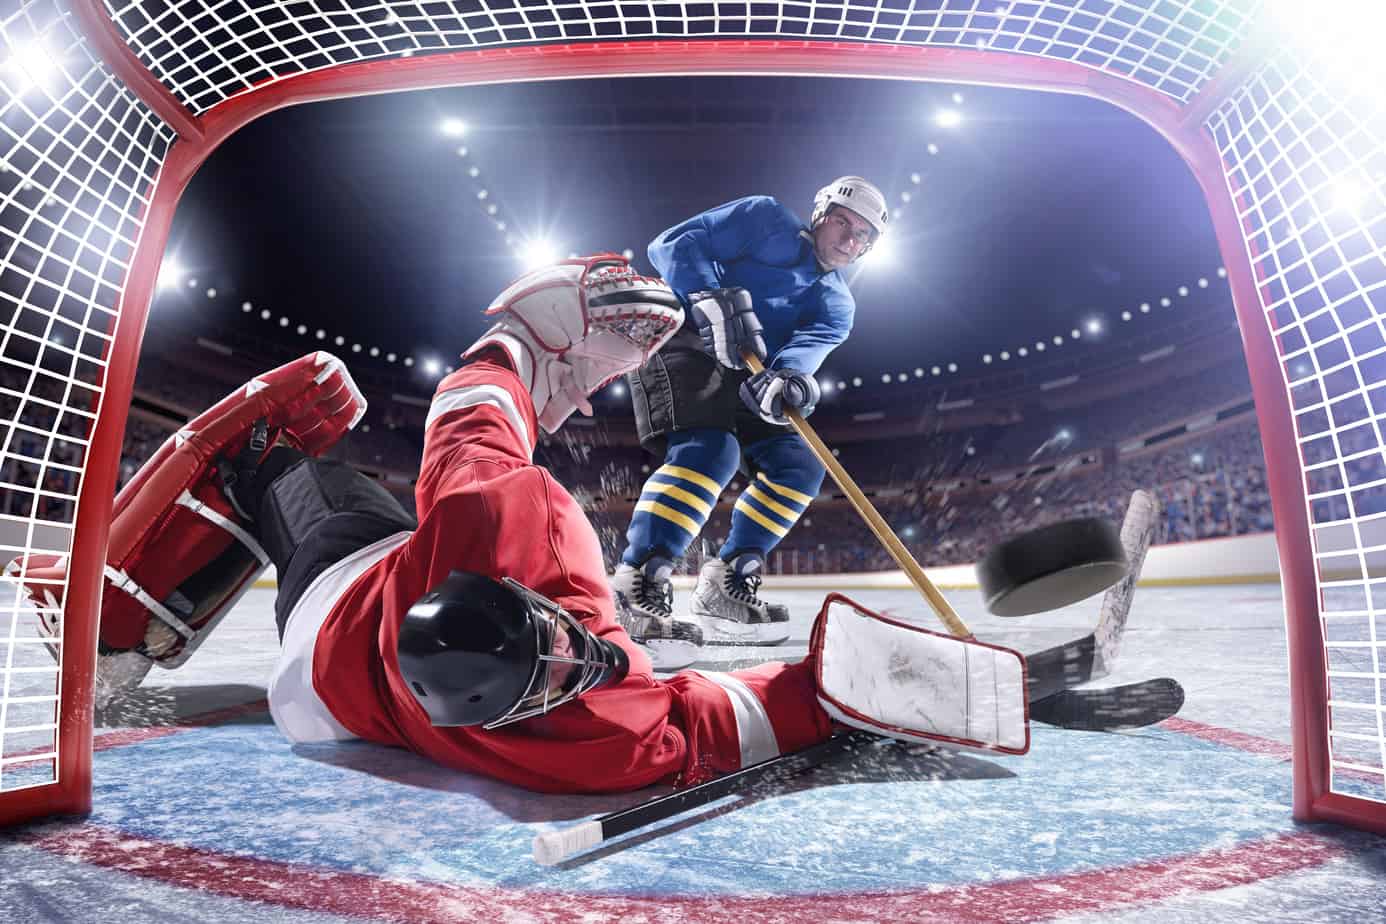 hockey athlete and painkiller abuse